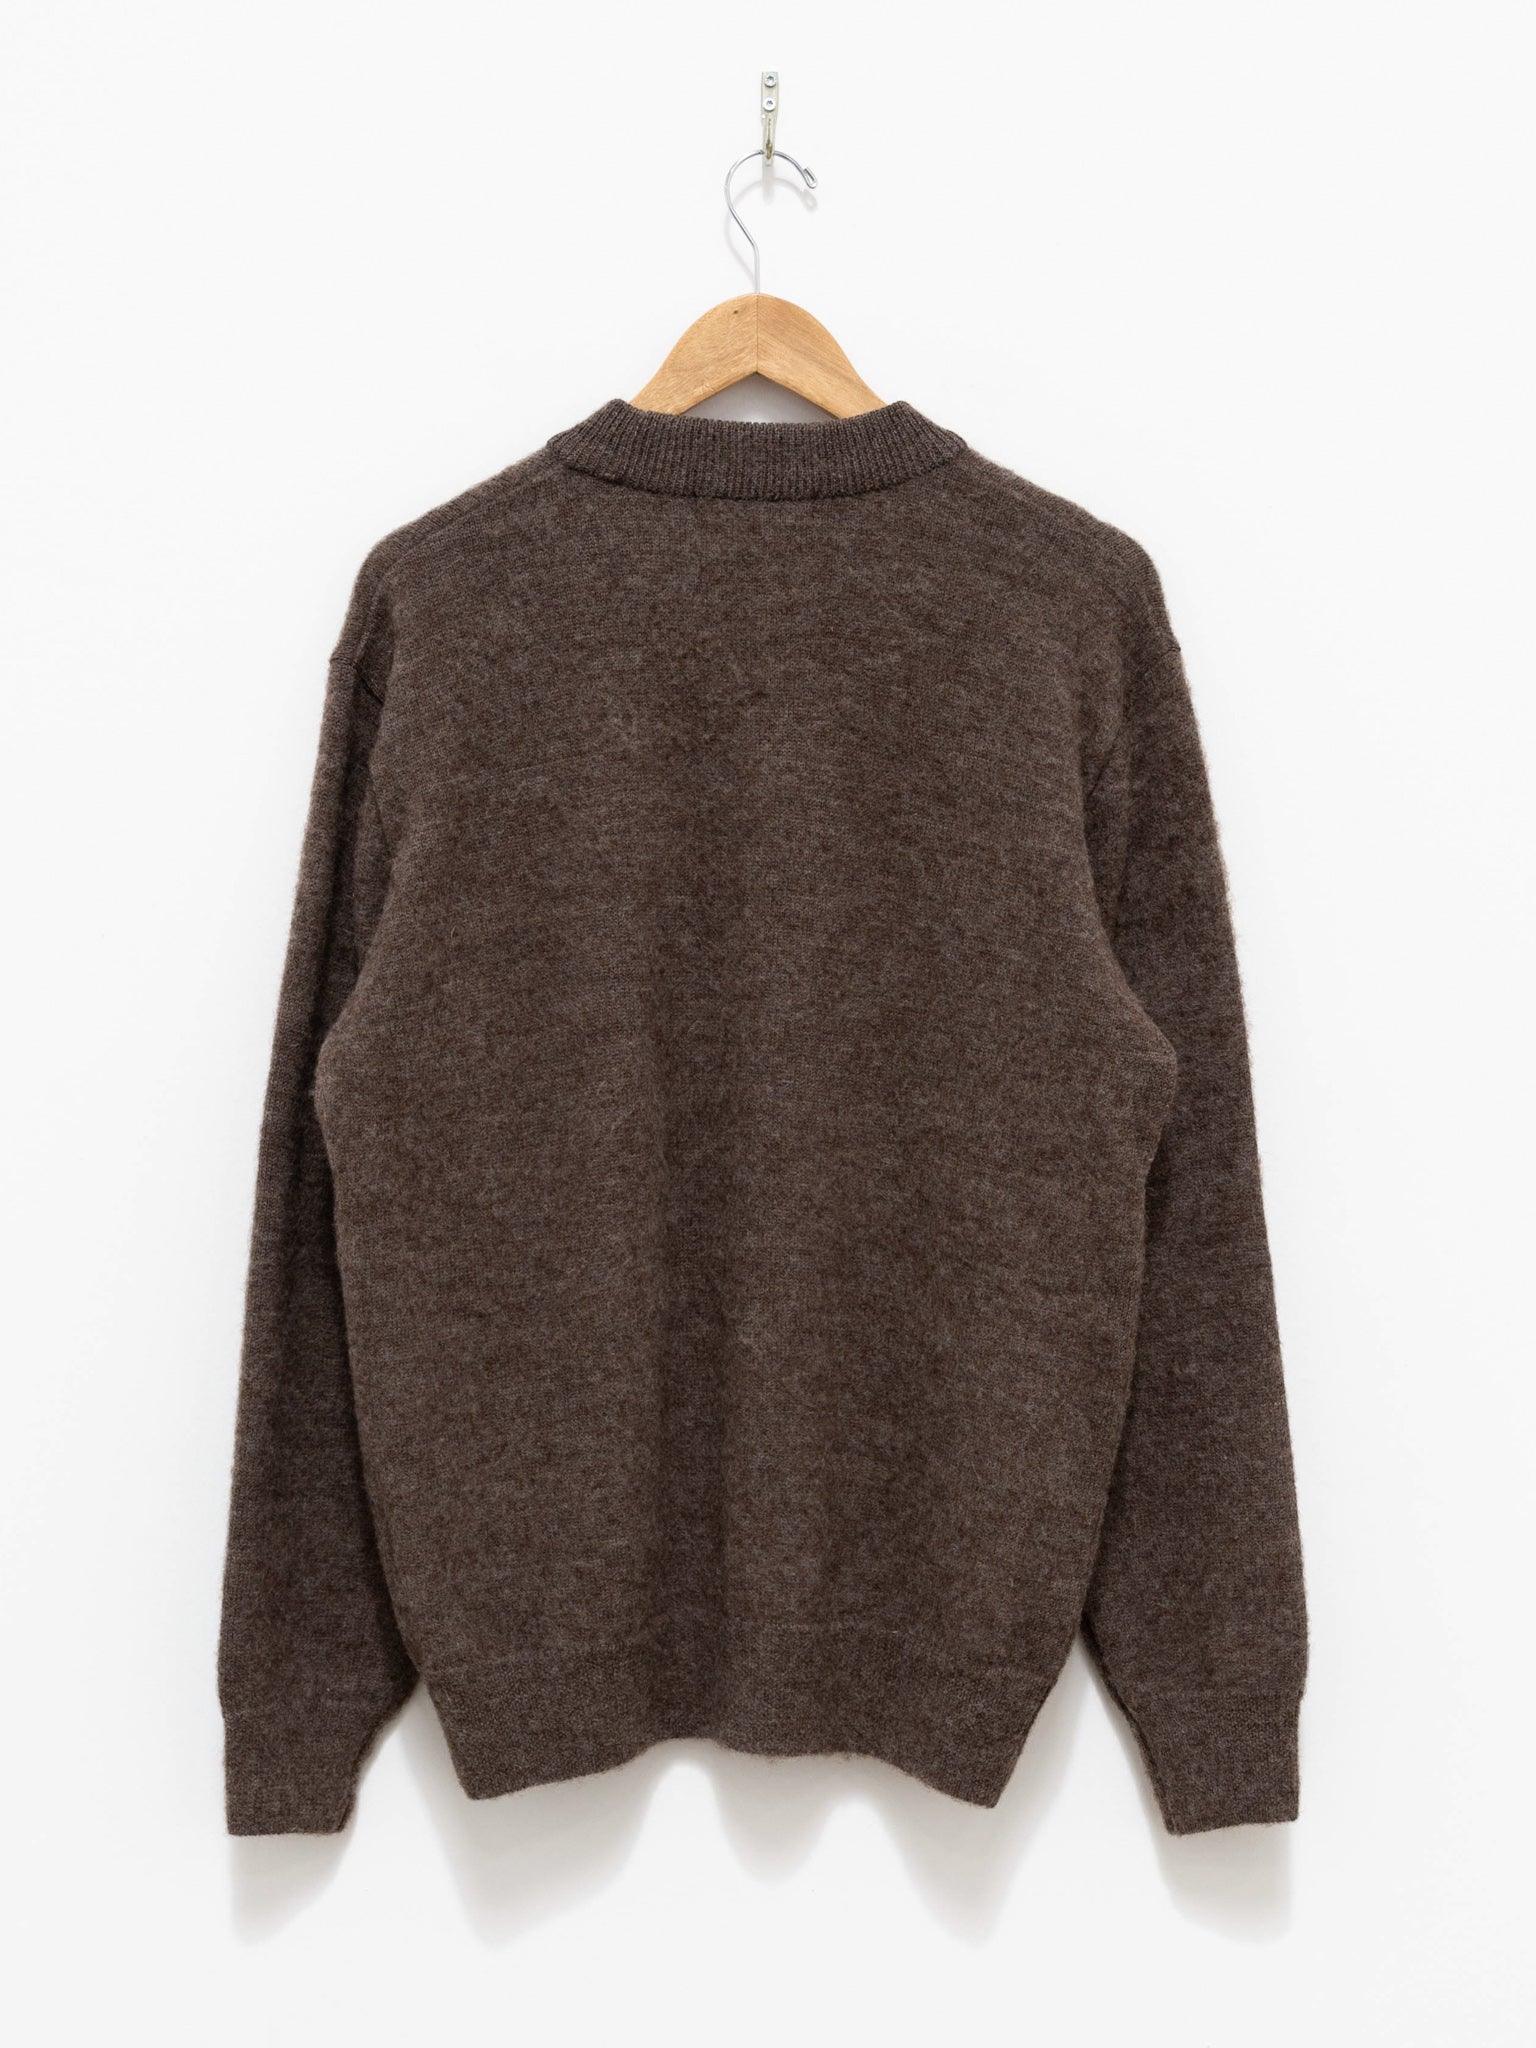 Namu Shop - Fujito C/N Knit Sweater - Brown